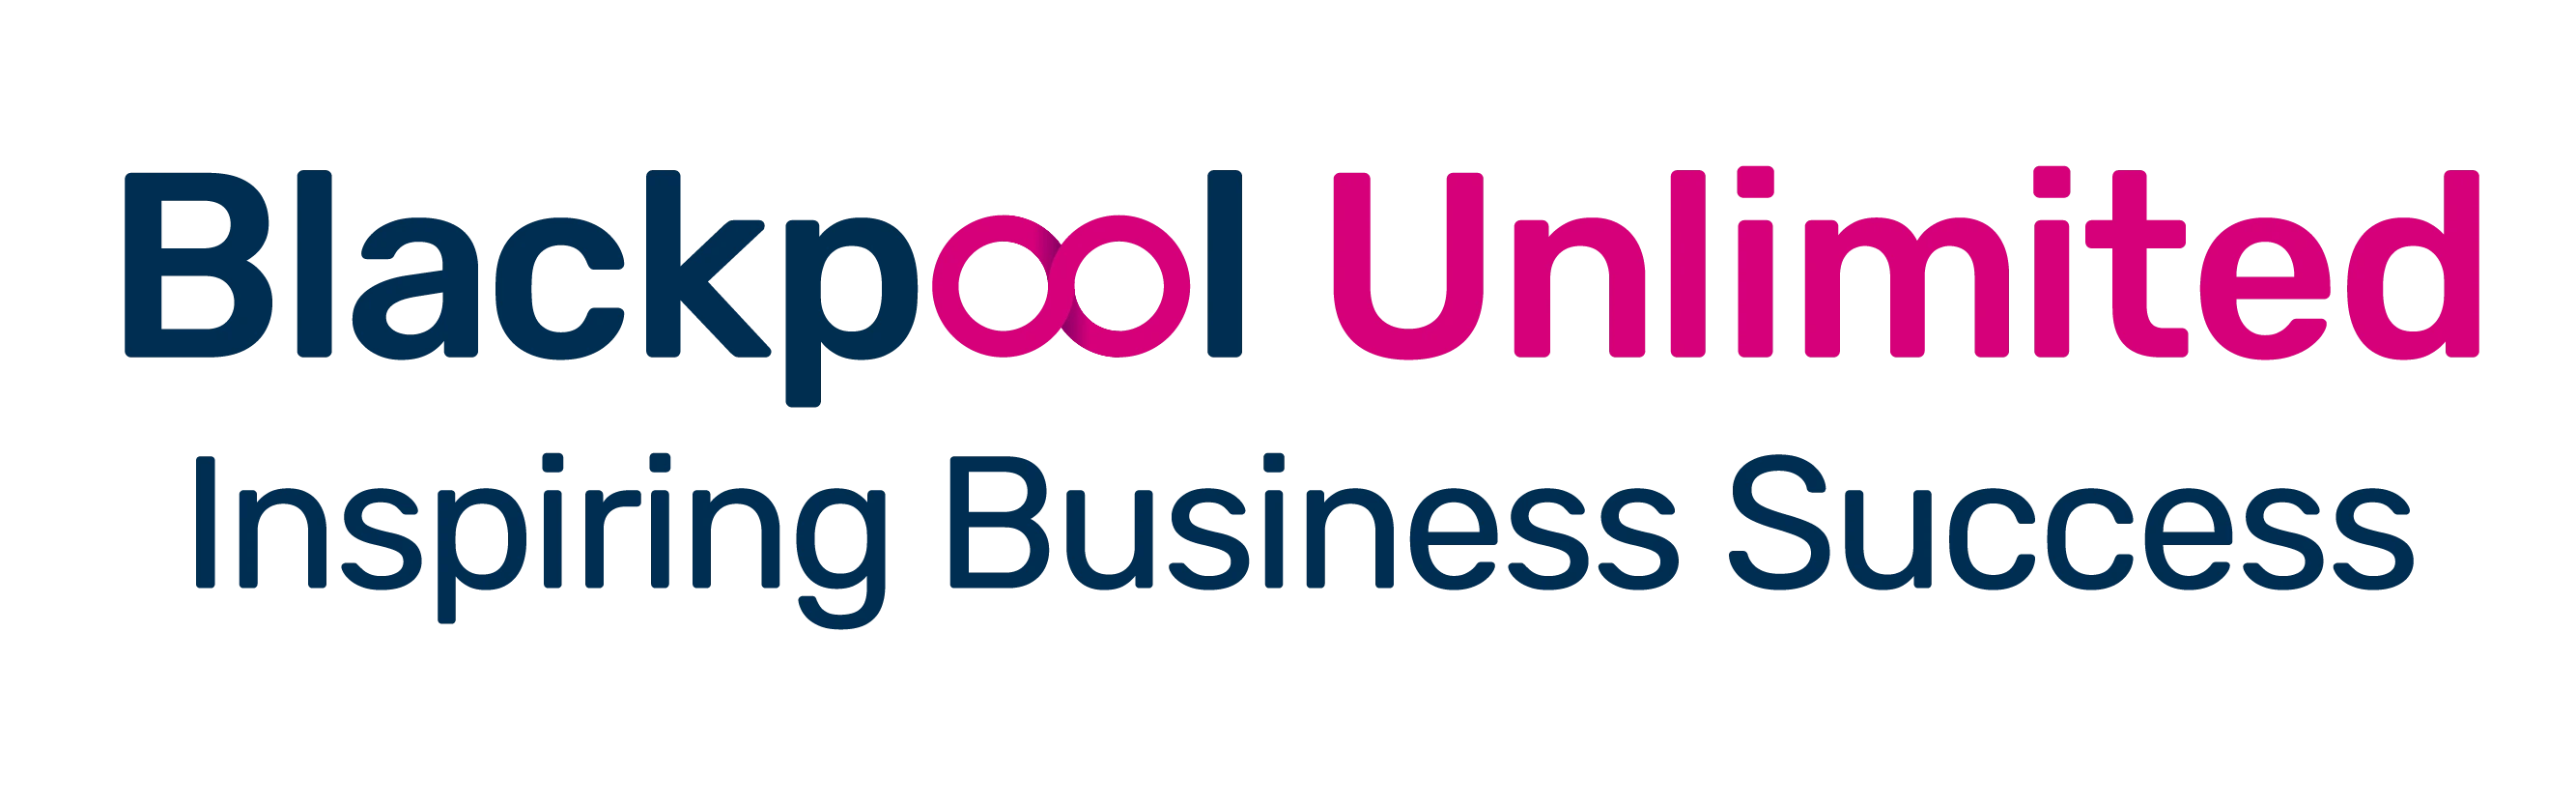 Blackpool Unlimited Logo